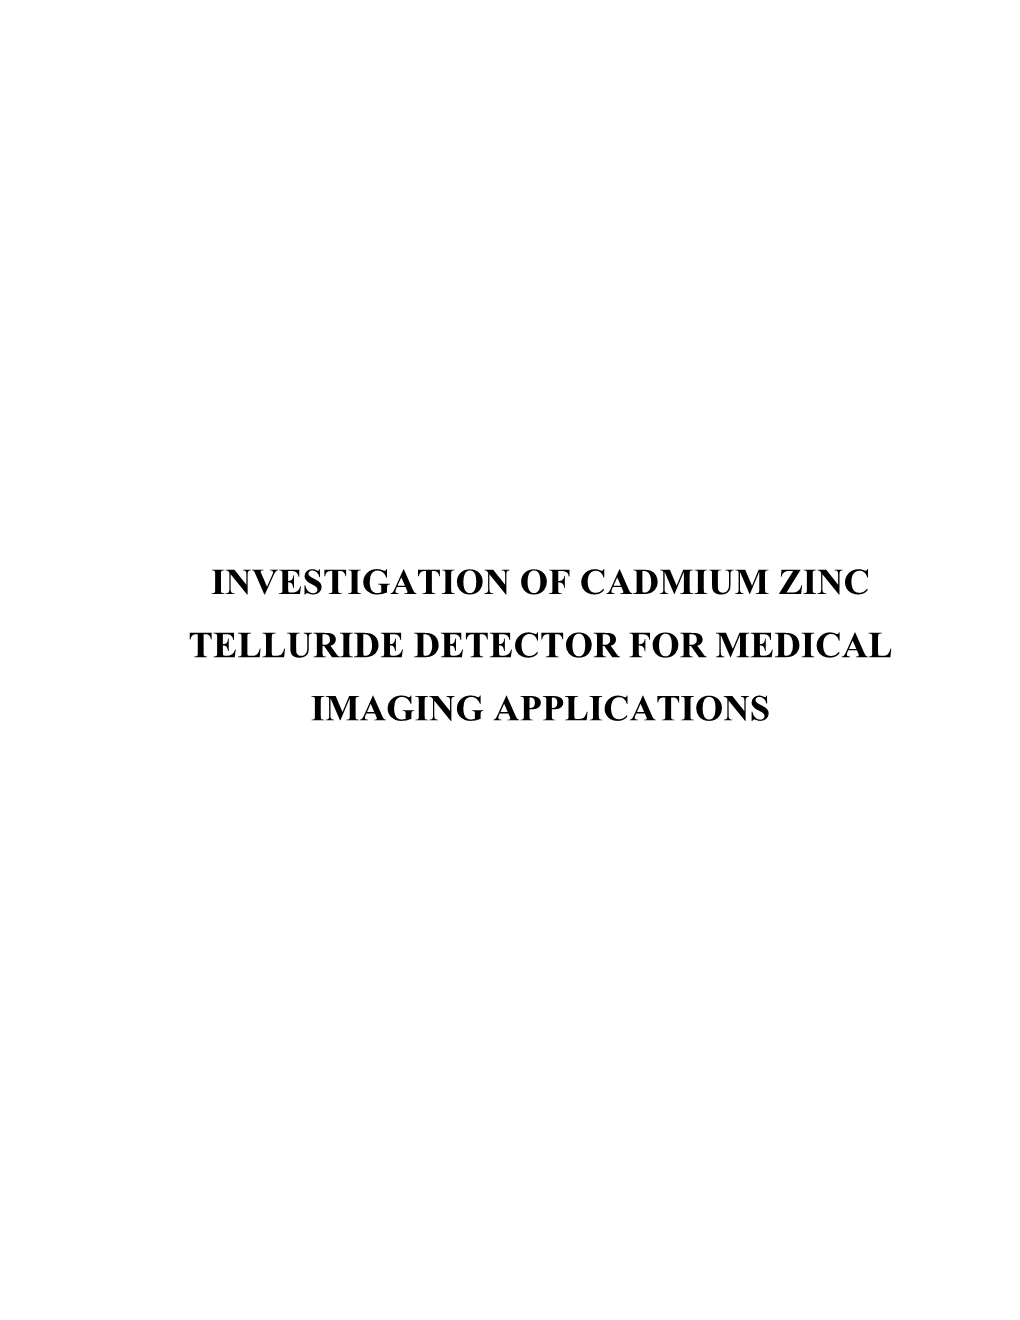 Investigation of Cadmium Zinc Telluride Detector for Medical Imaging Applications